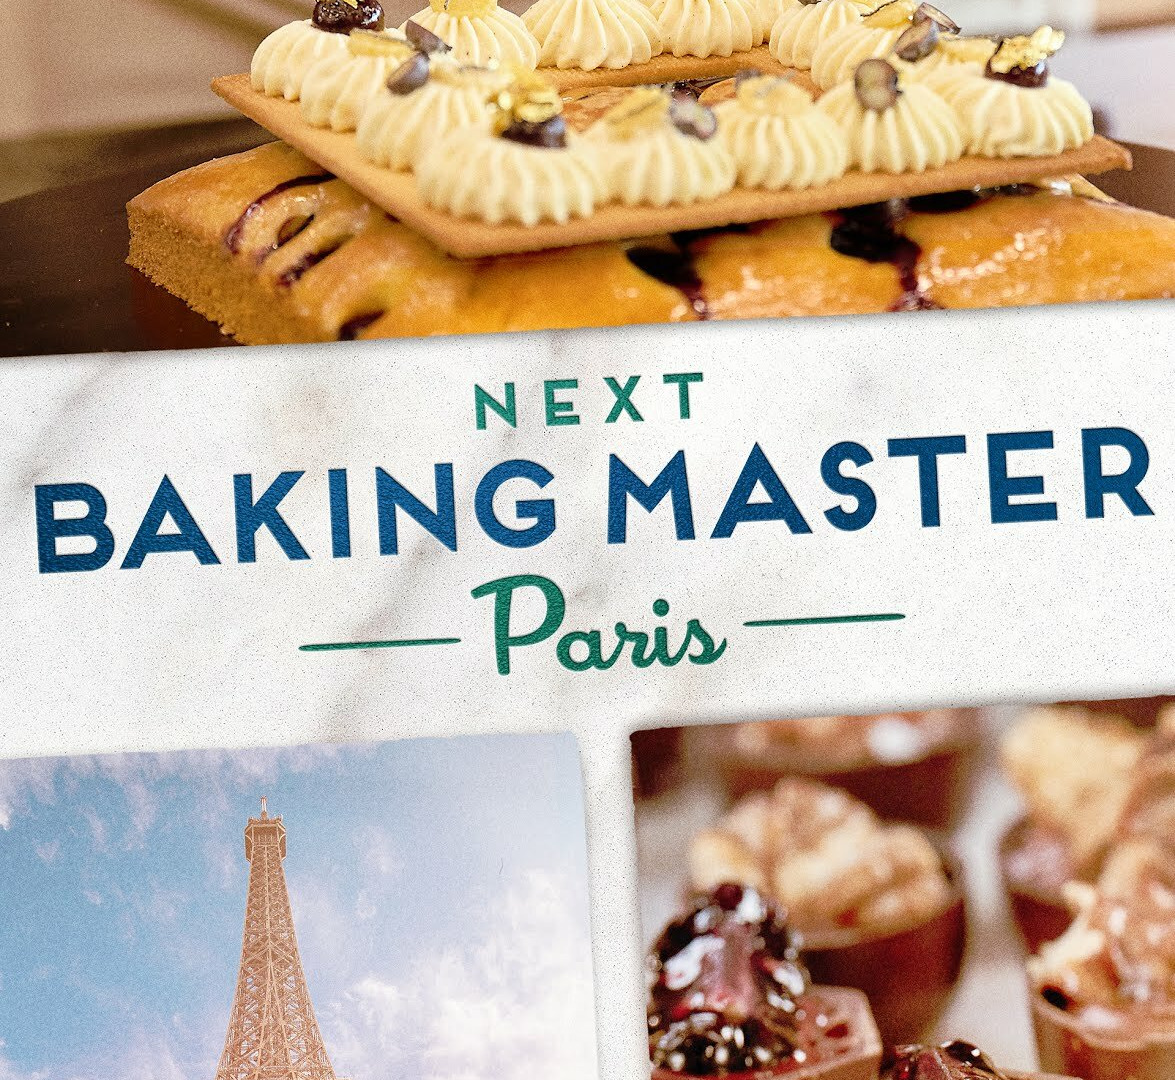 Show Next Baking Master: Paris